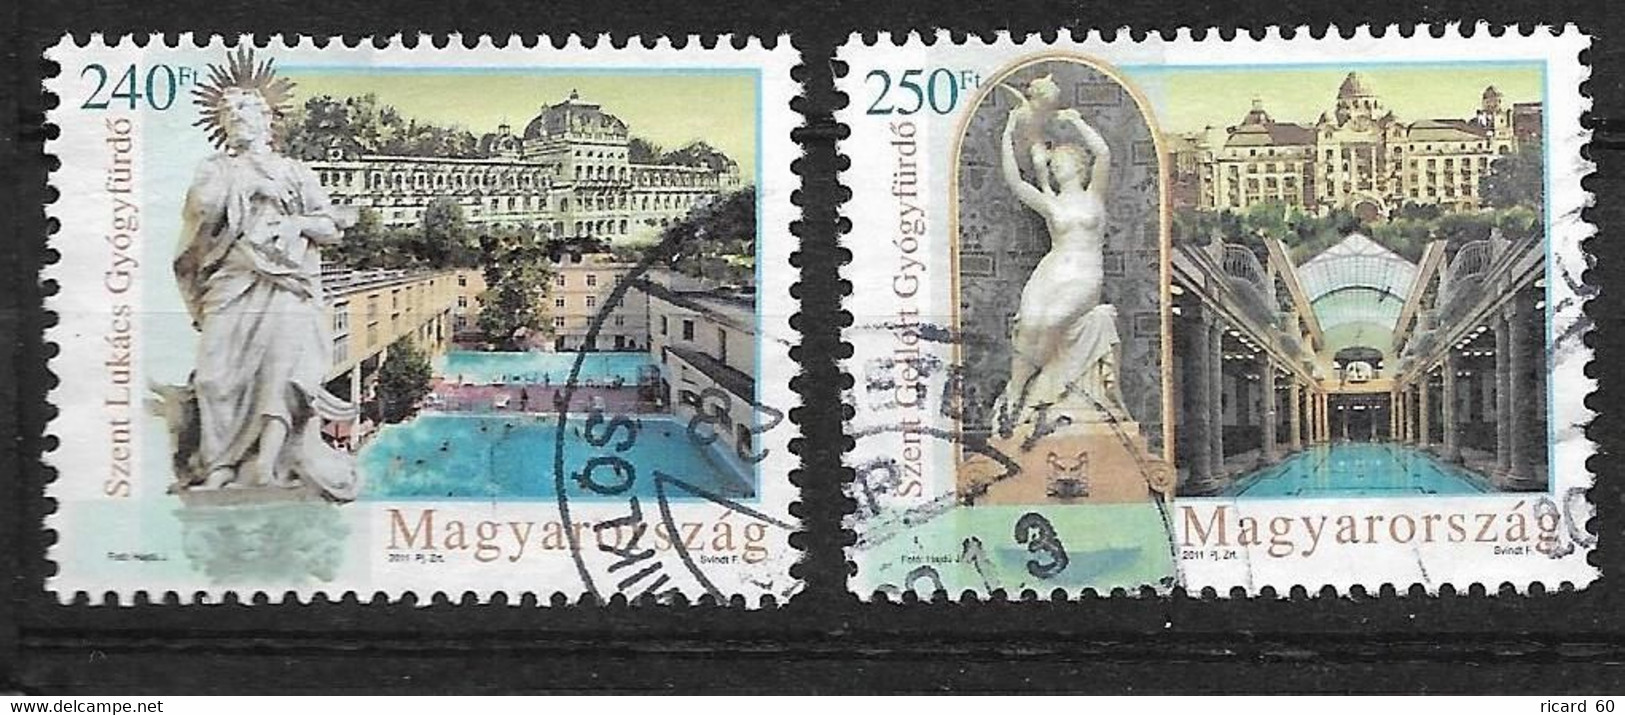 Timbres Oblitérés De Hongrie, BF N°4458-59 Yt, 2011, Piscines, Spa, Statues - Used Stamps